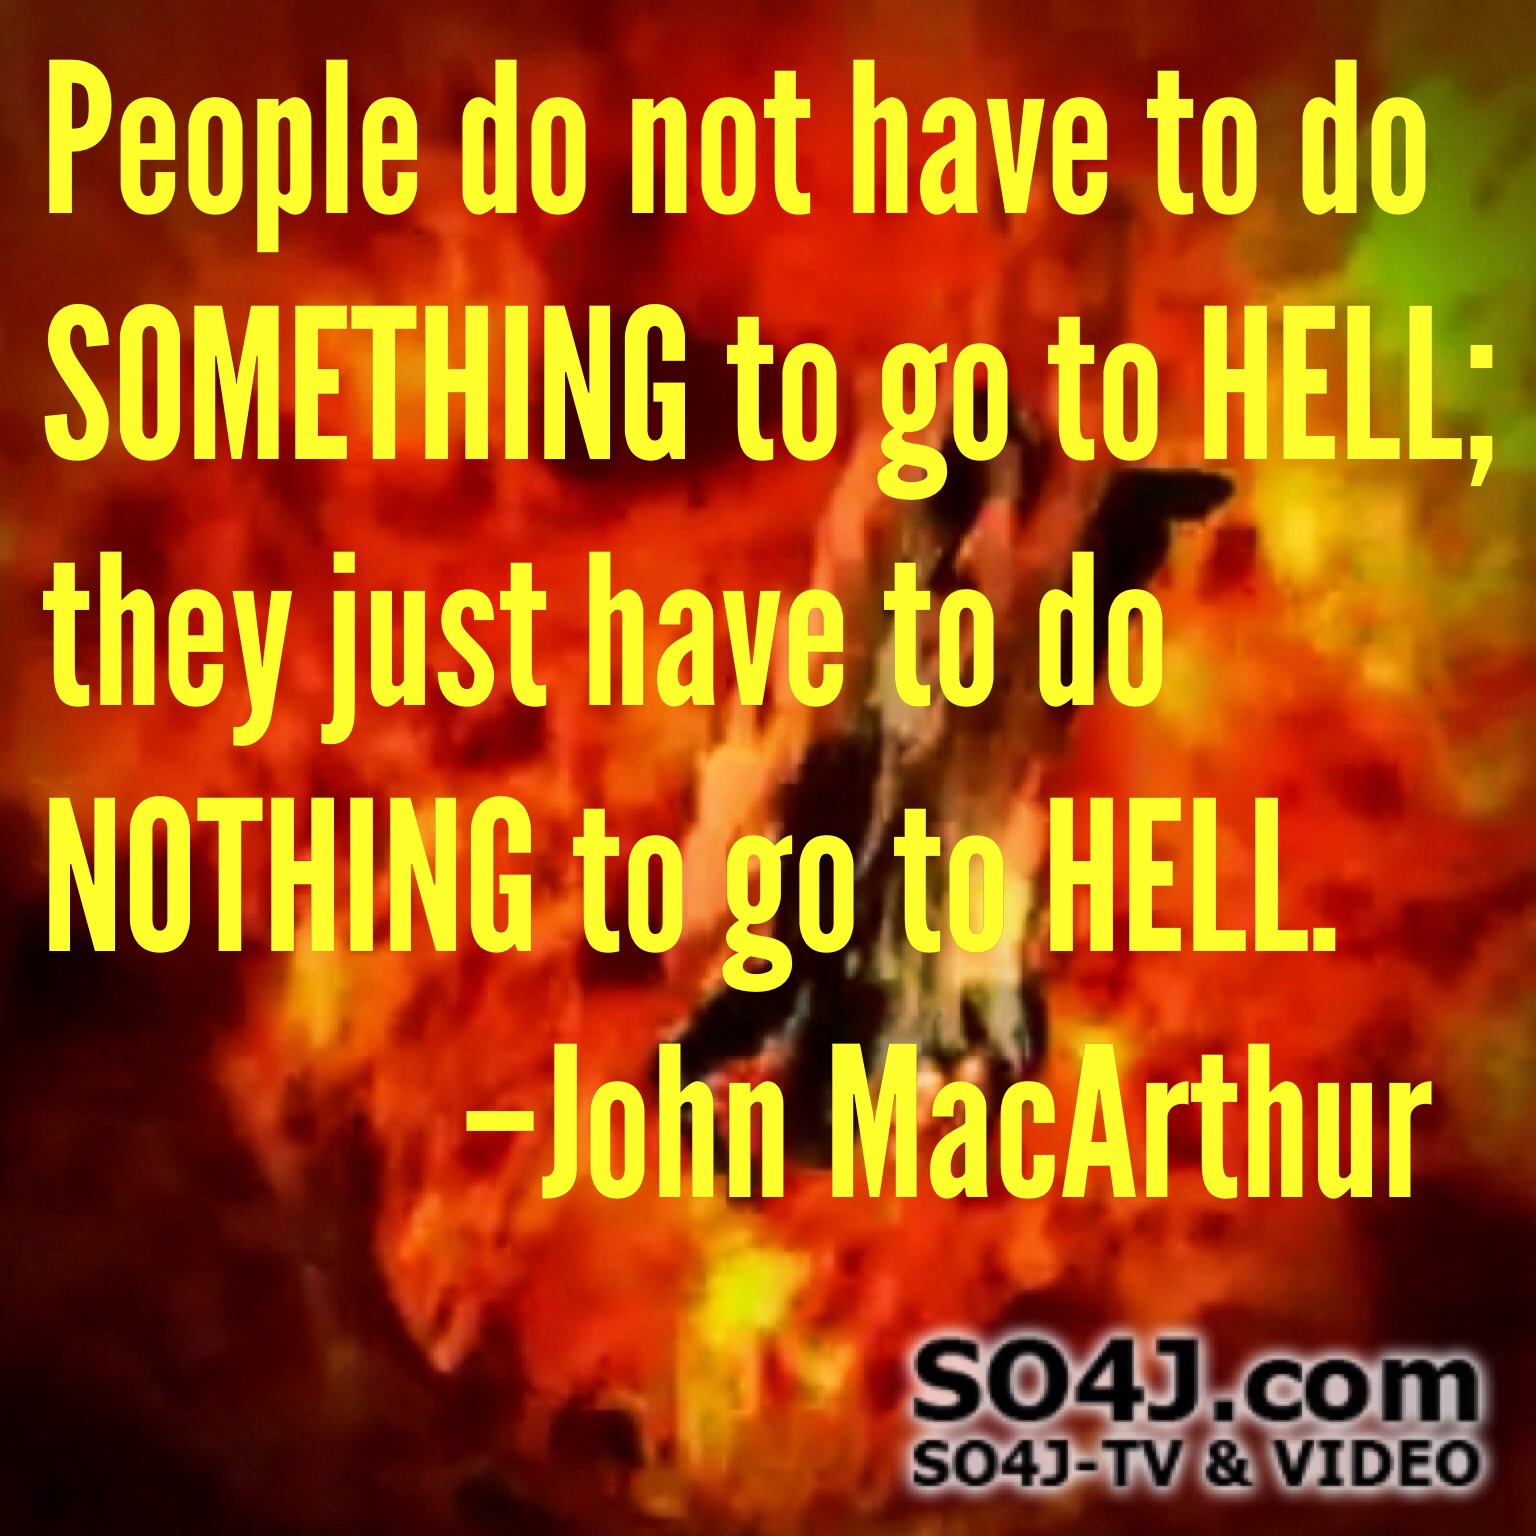 Hell - Quotes - John MacArthur - SO4J-TV - SO4J.com